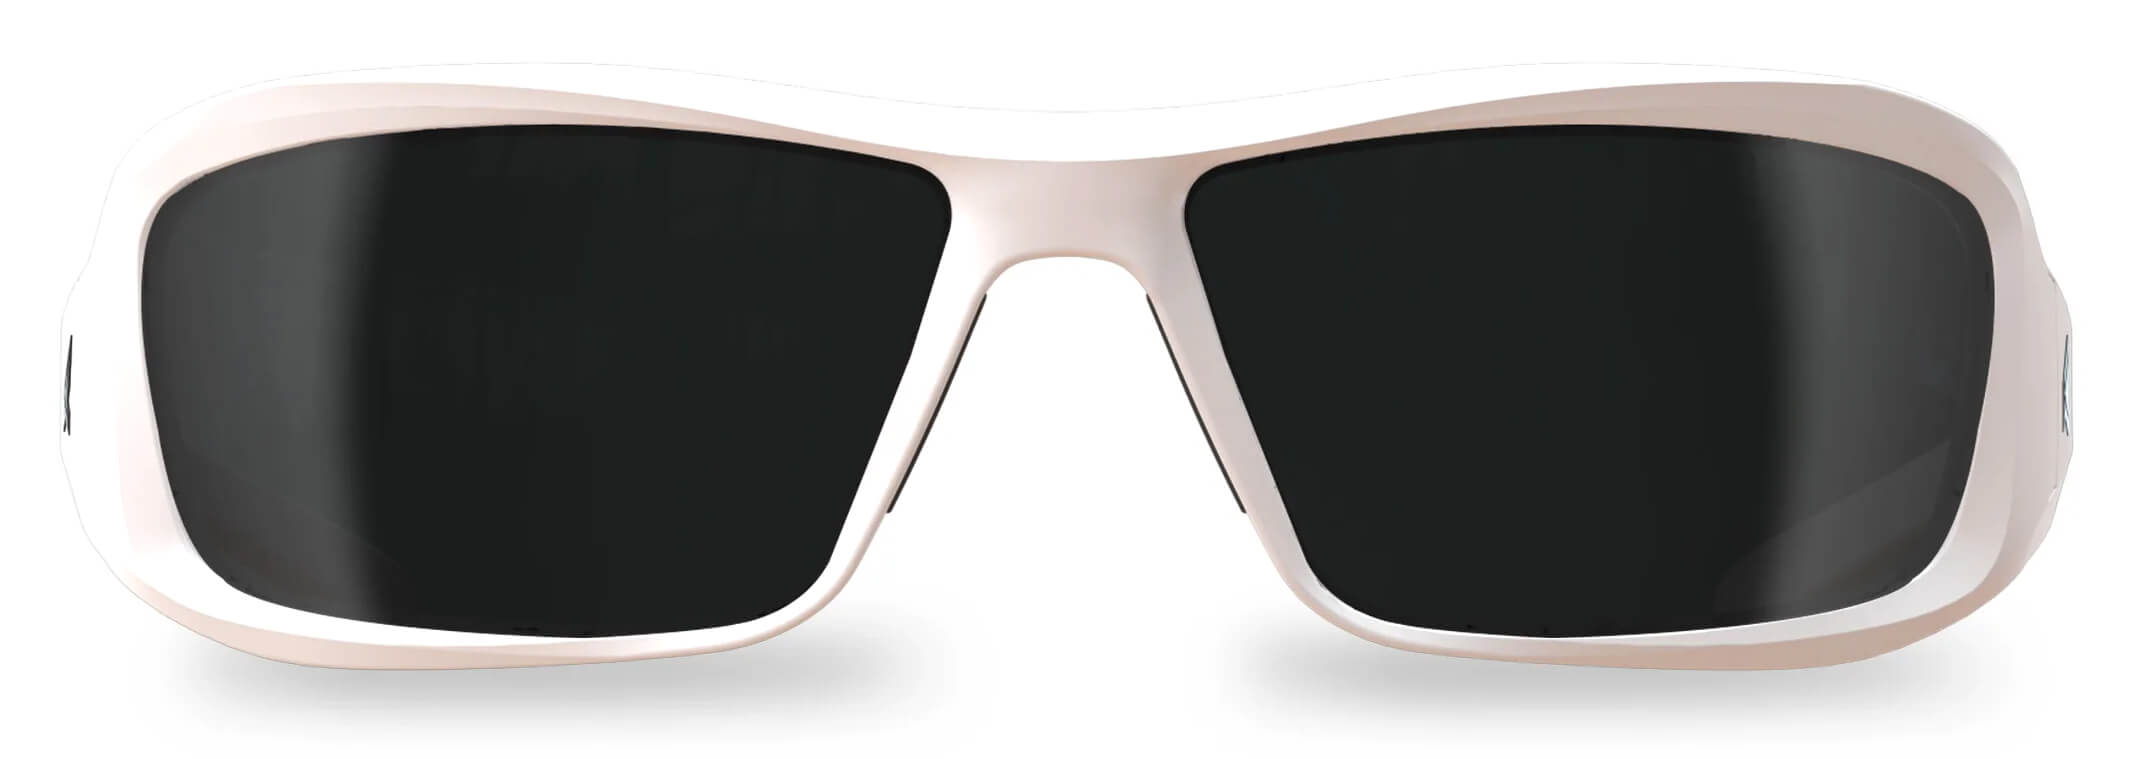 Edge Brazeau Designer Series with White Frame and Smoke Lens